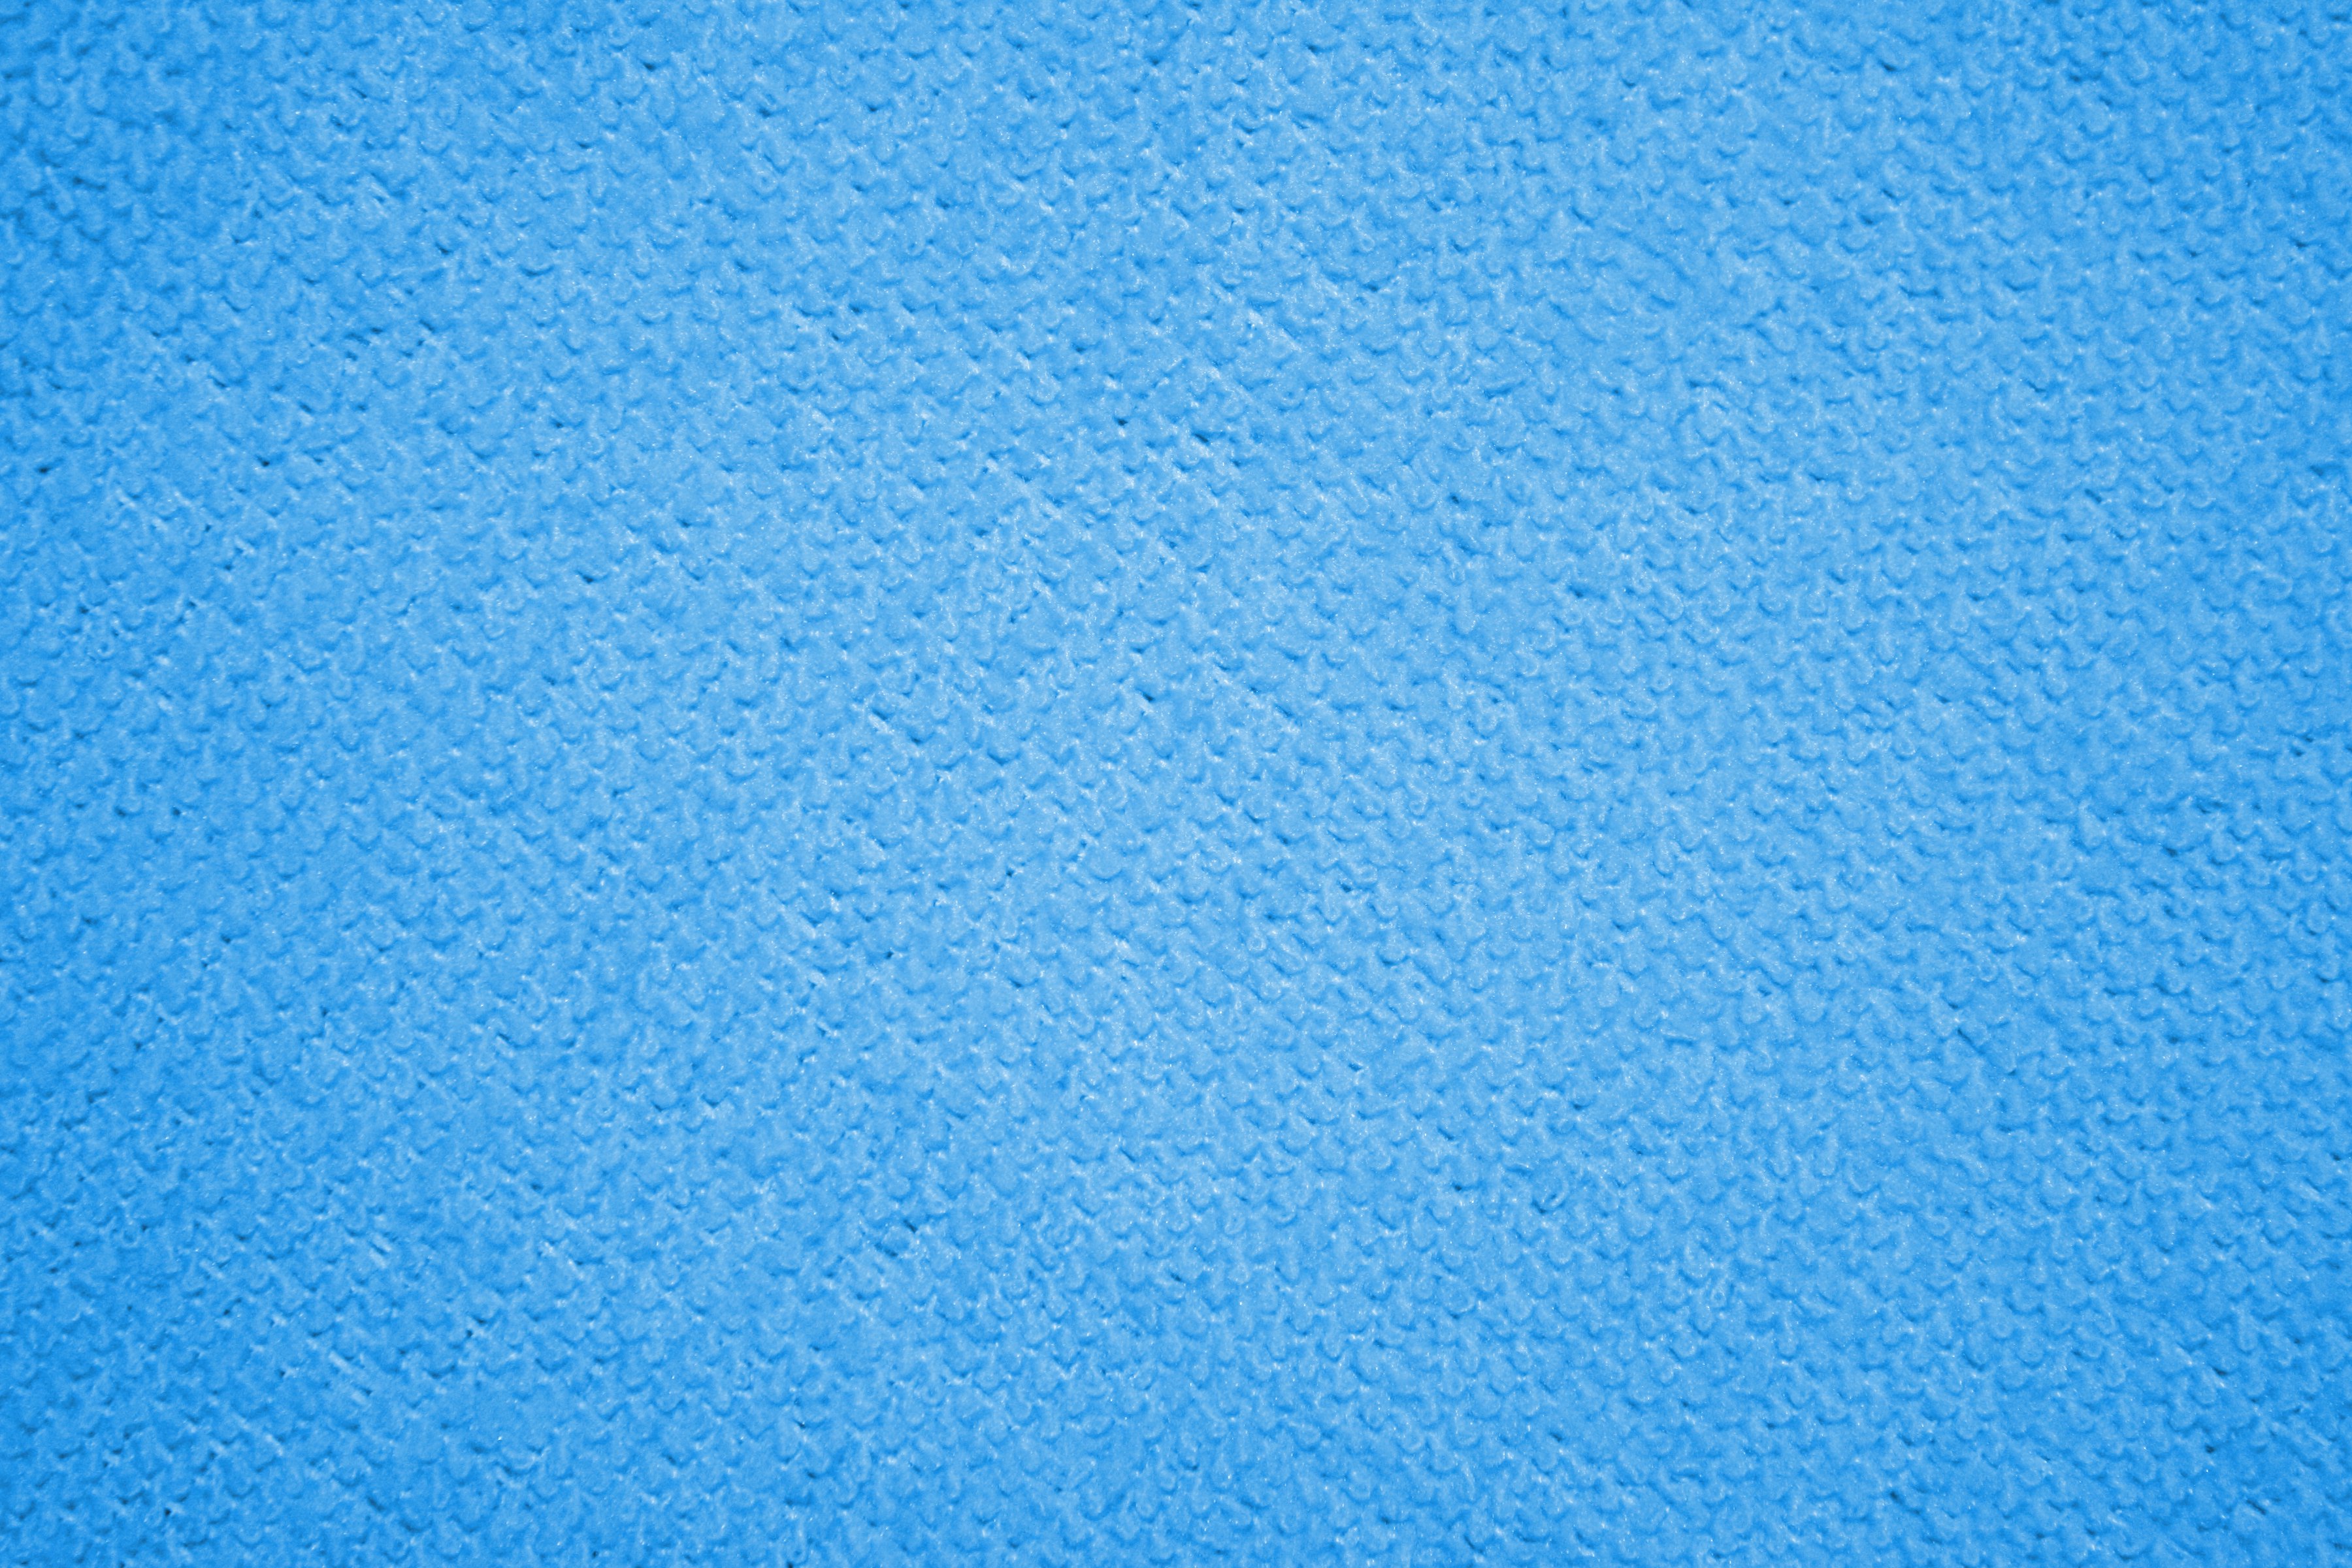 Azure Blue Microfiber Cloth Fabric Texture Picture Photograph